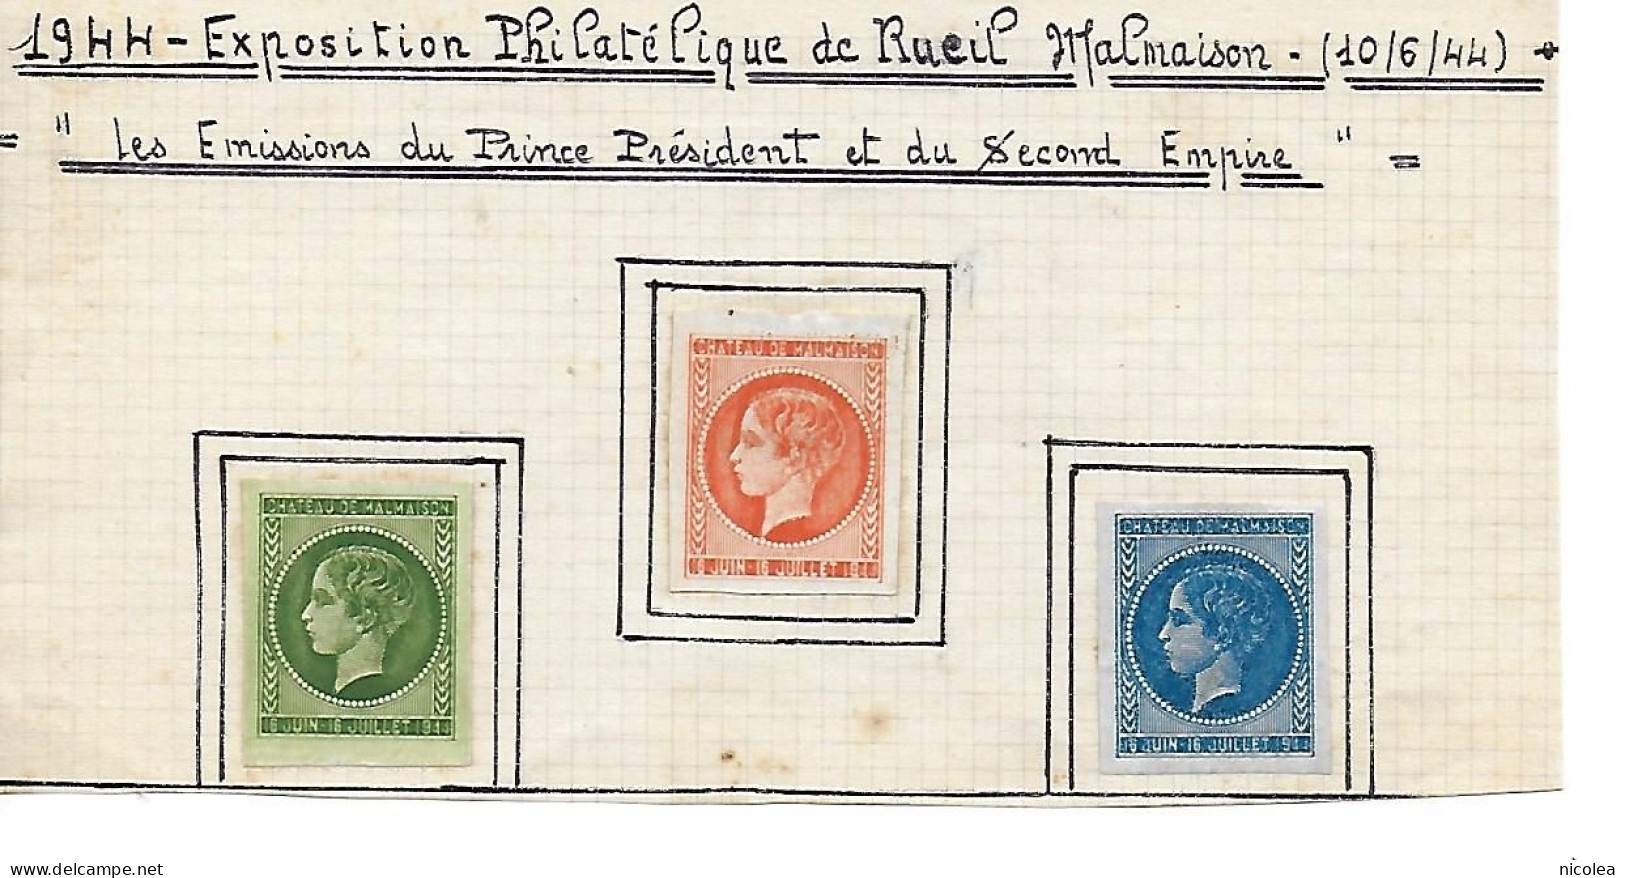 3 Vignettes Napoleon Enfant Exposition Philatelique Rueil Malmaison 1944 - Esposizioni Filateliche